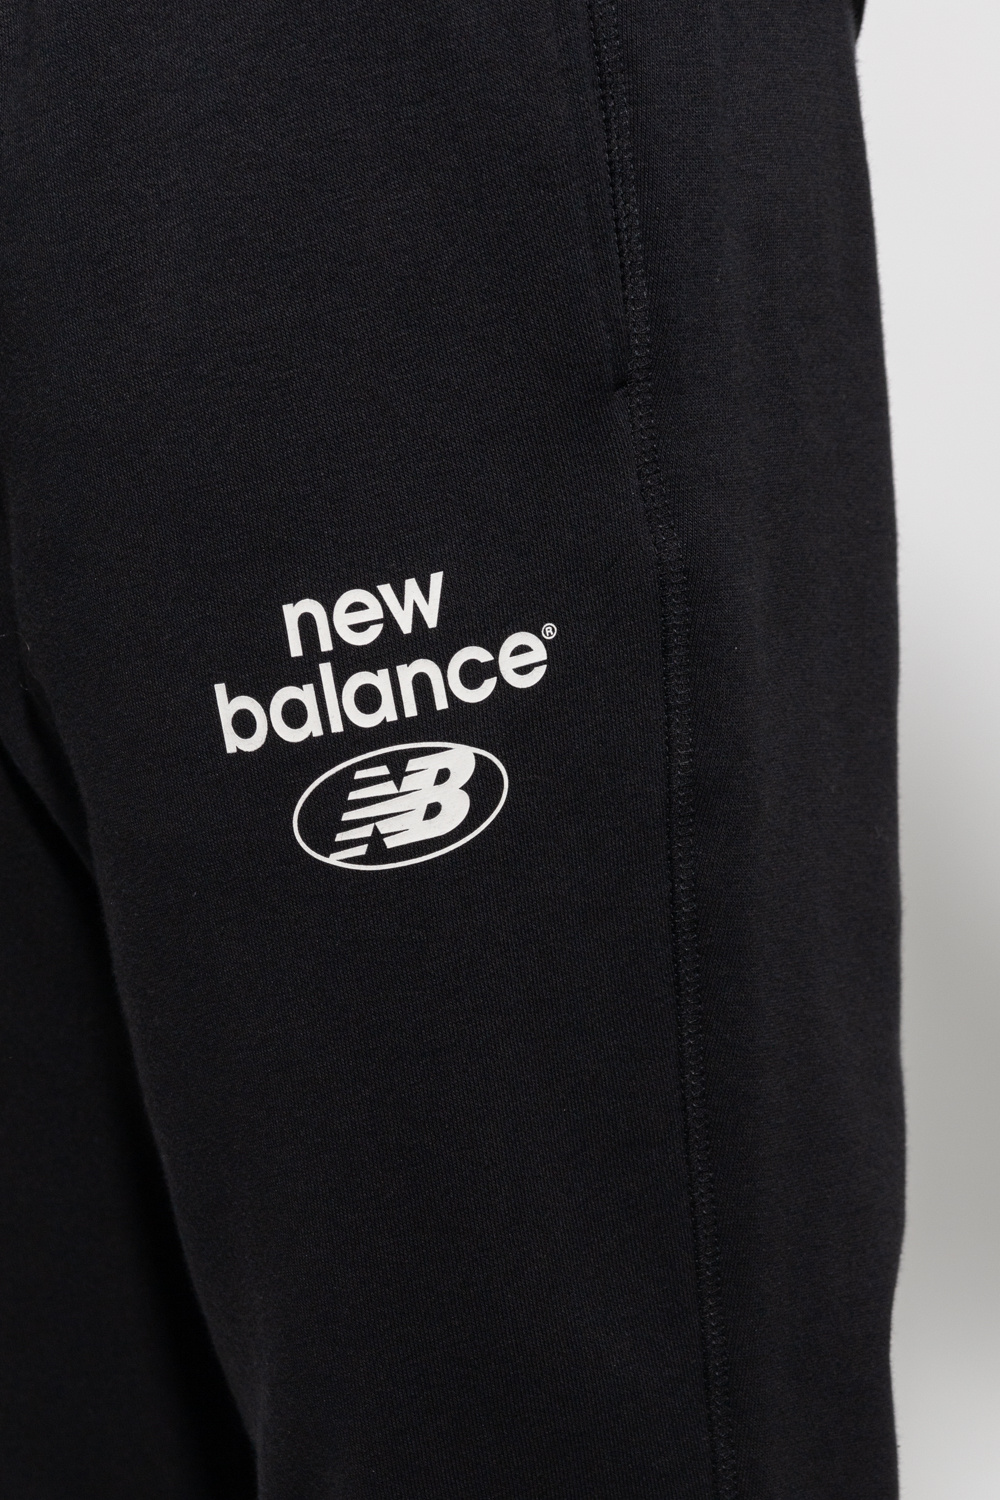 Crew X New Balance 997 Cortado | New Balance new balance ml2002